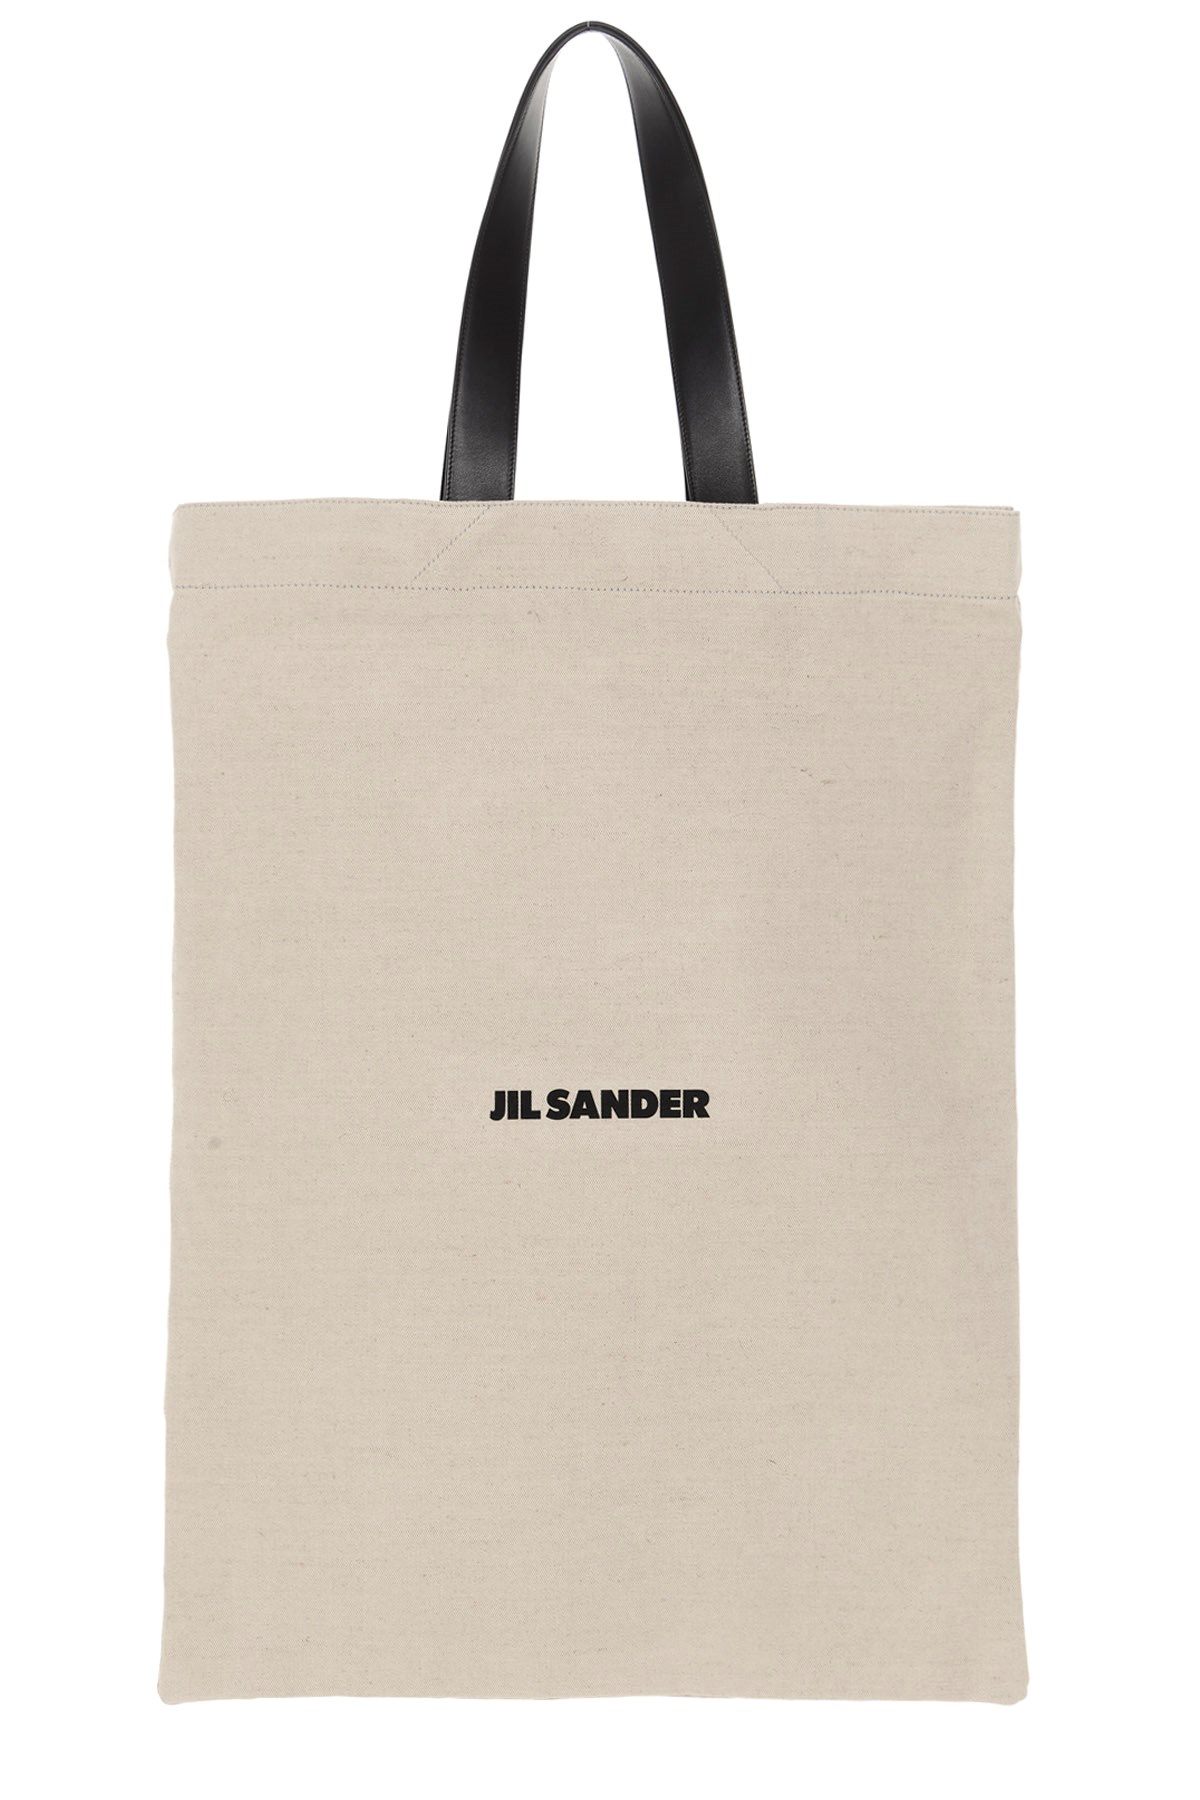 JIL SANDER Large Canvas Shopping Bag